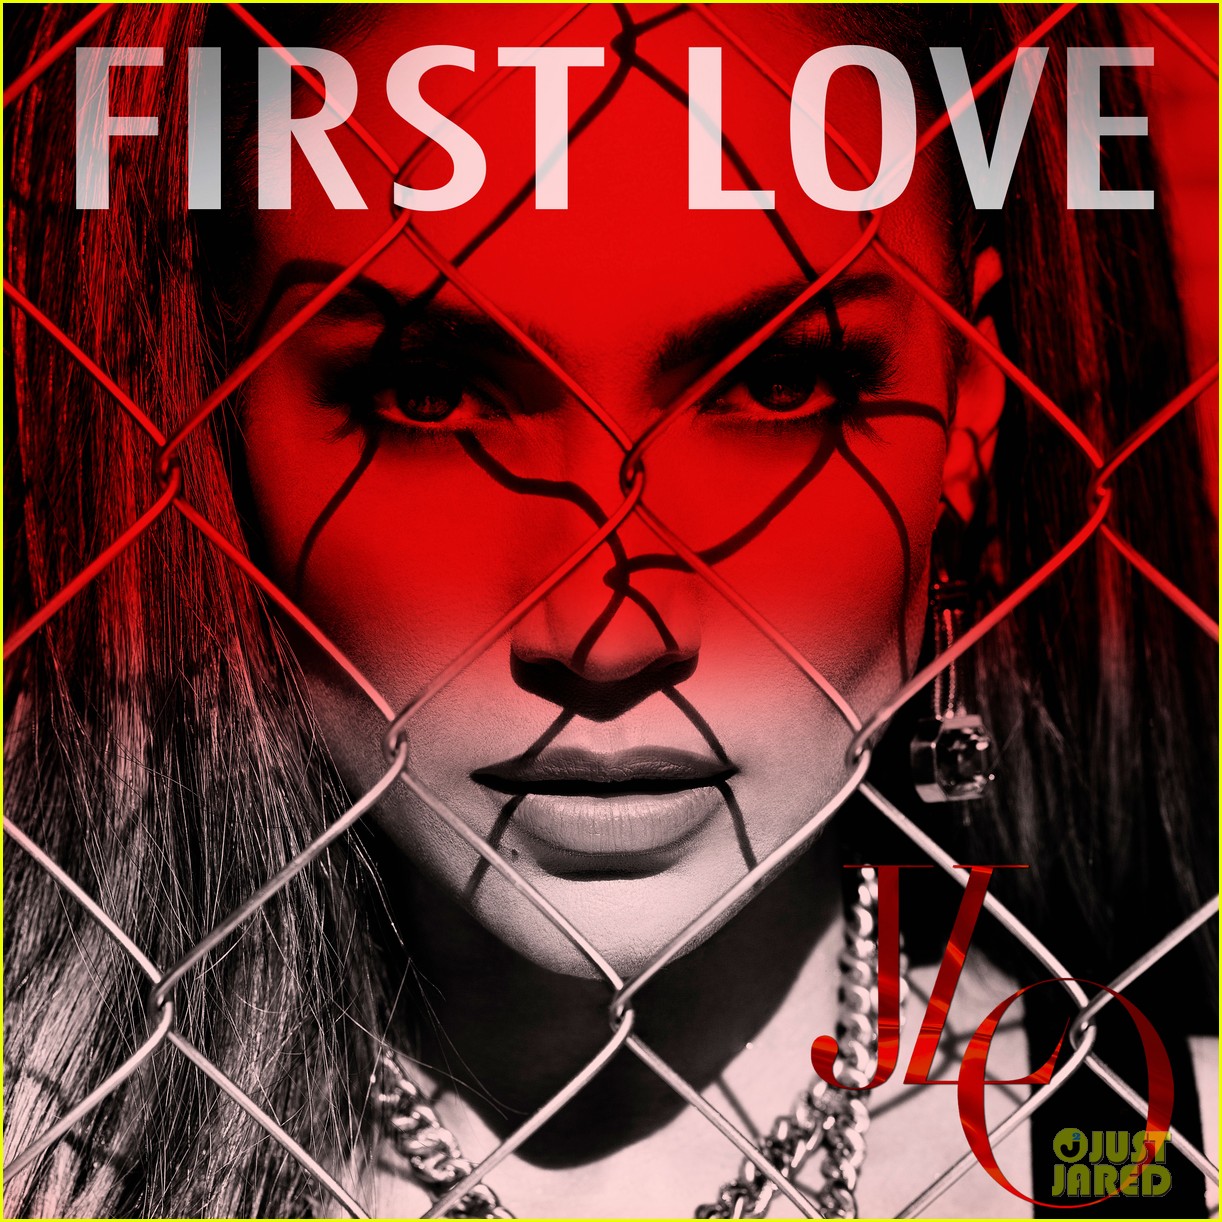 jennifer lopez first love single artwork3099835